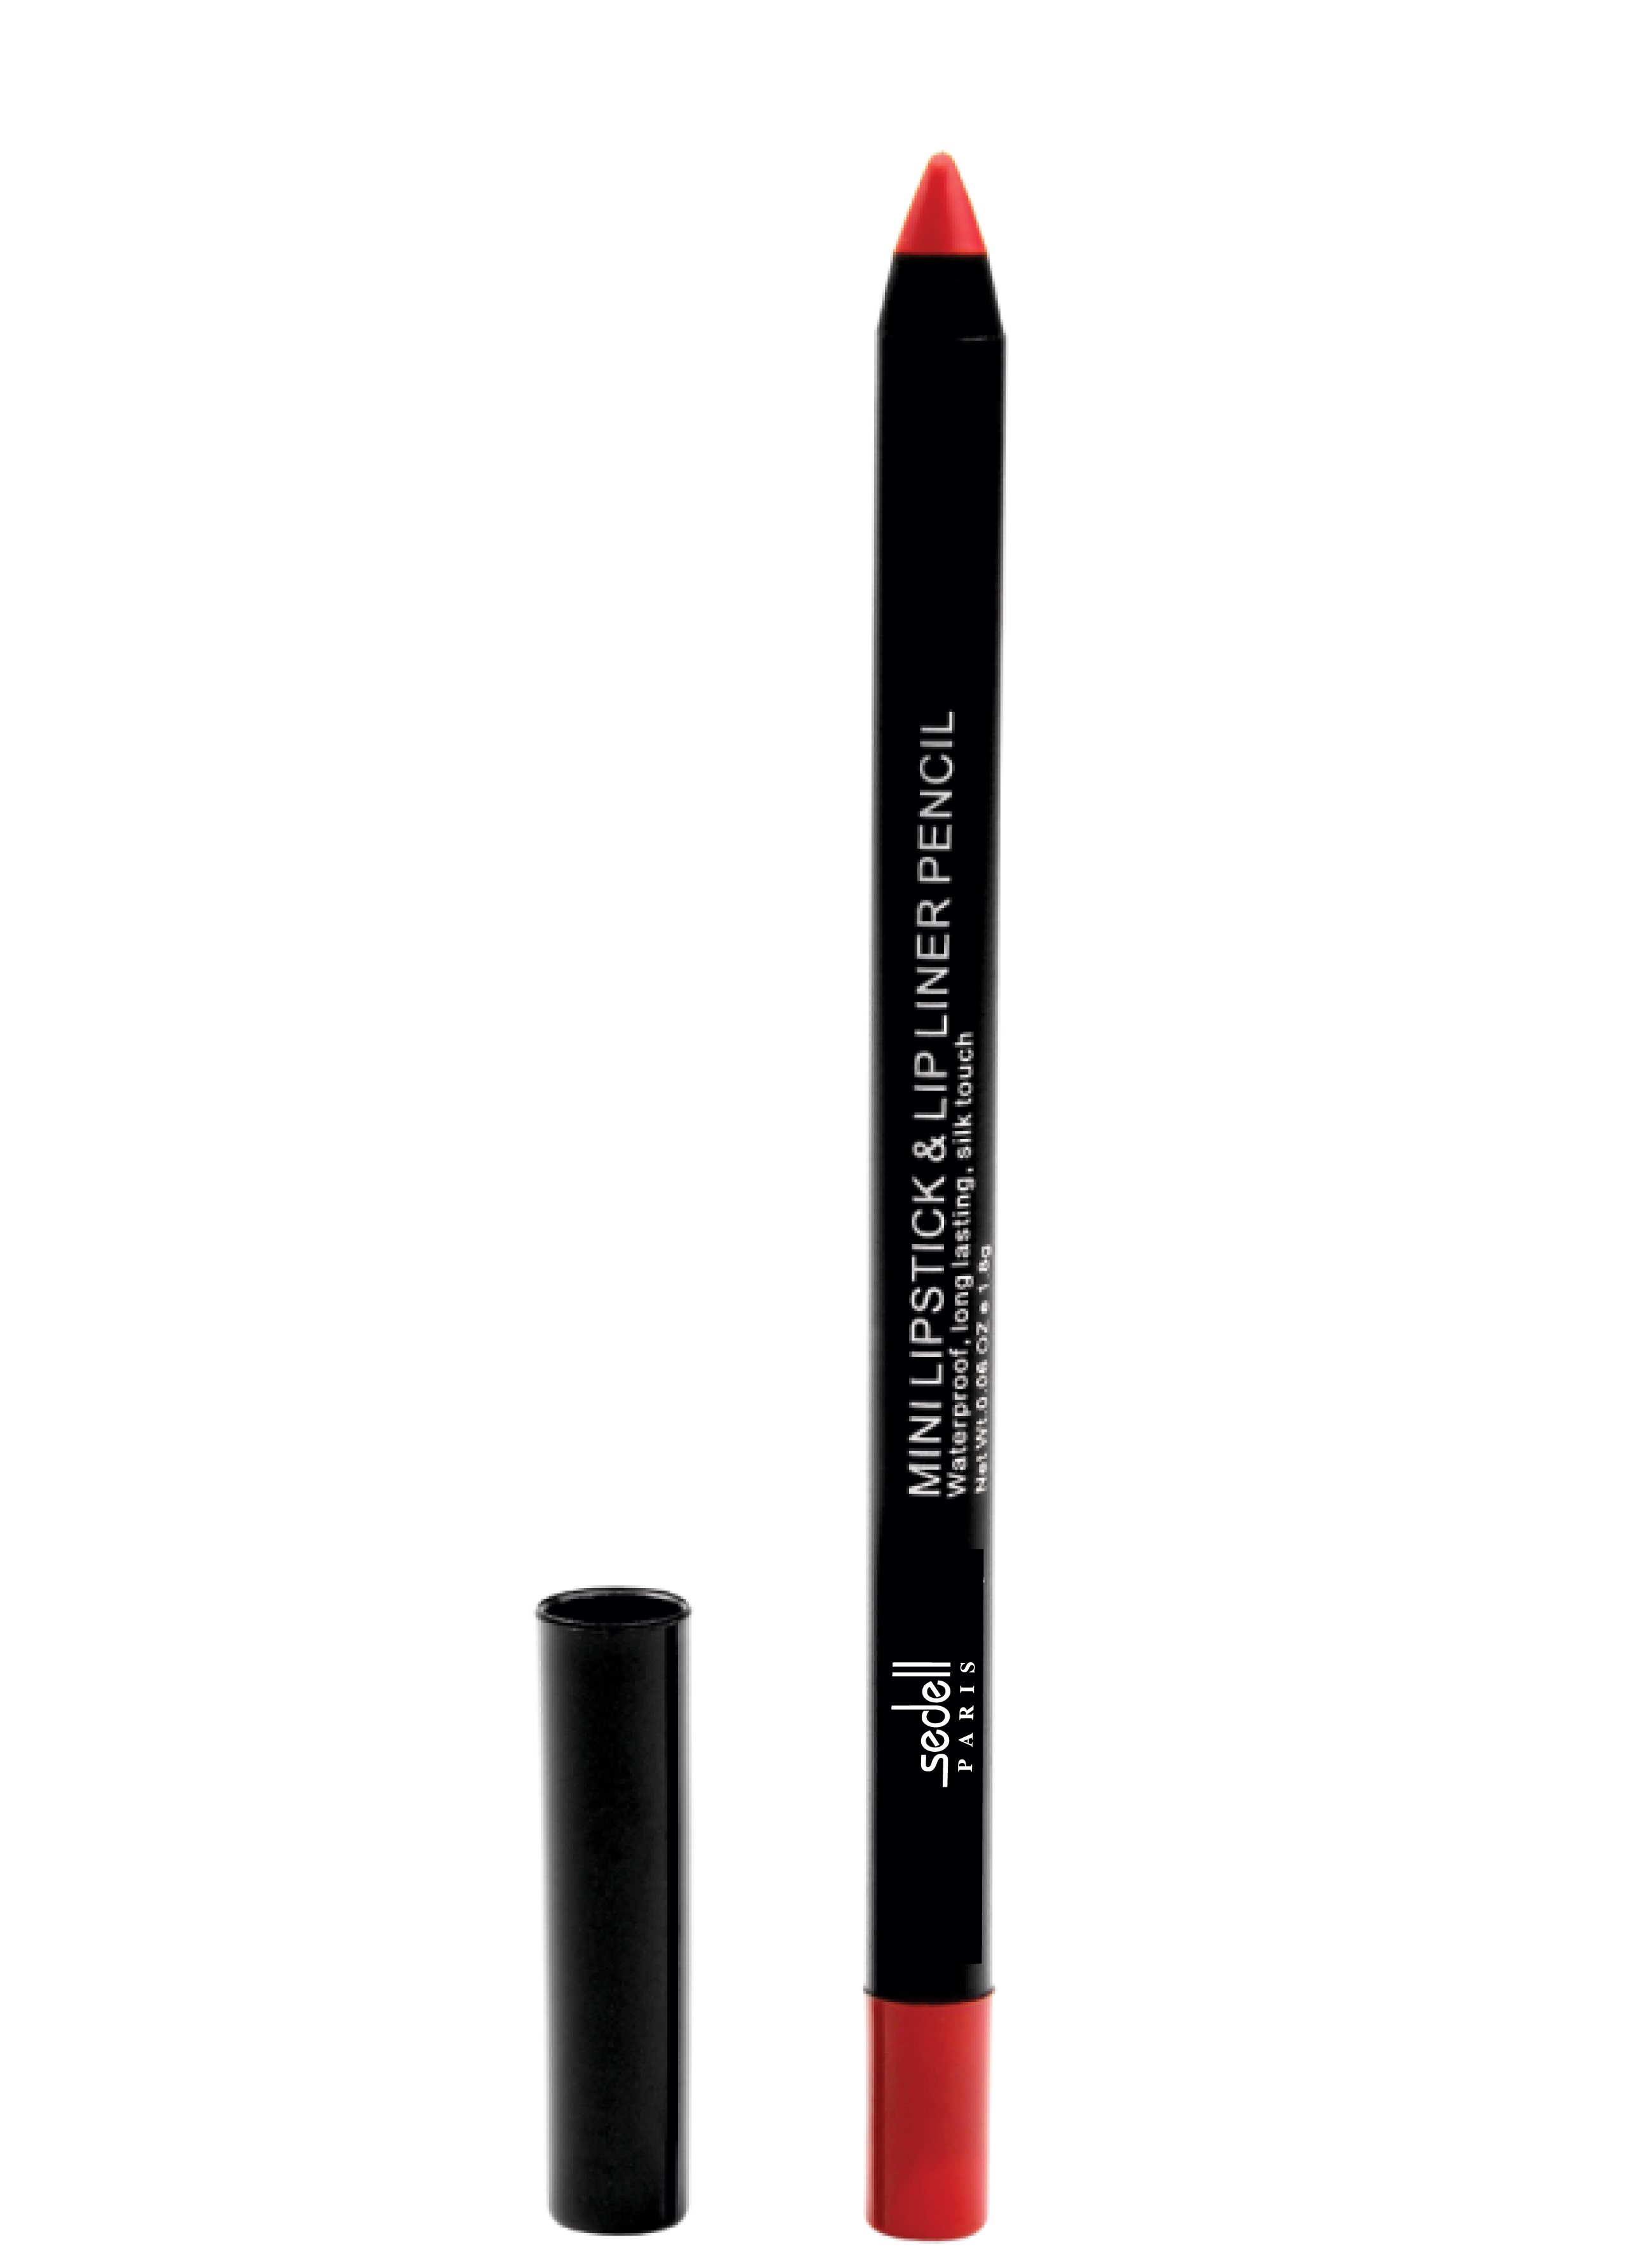 Sedell Paris Mini Lipstick & Lip Liner Pencil Fire Brick - 1.4g